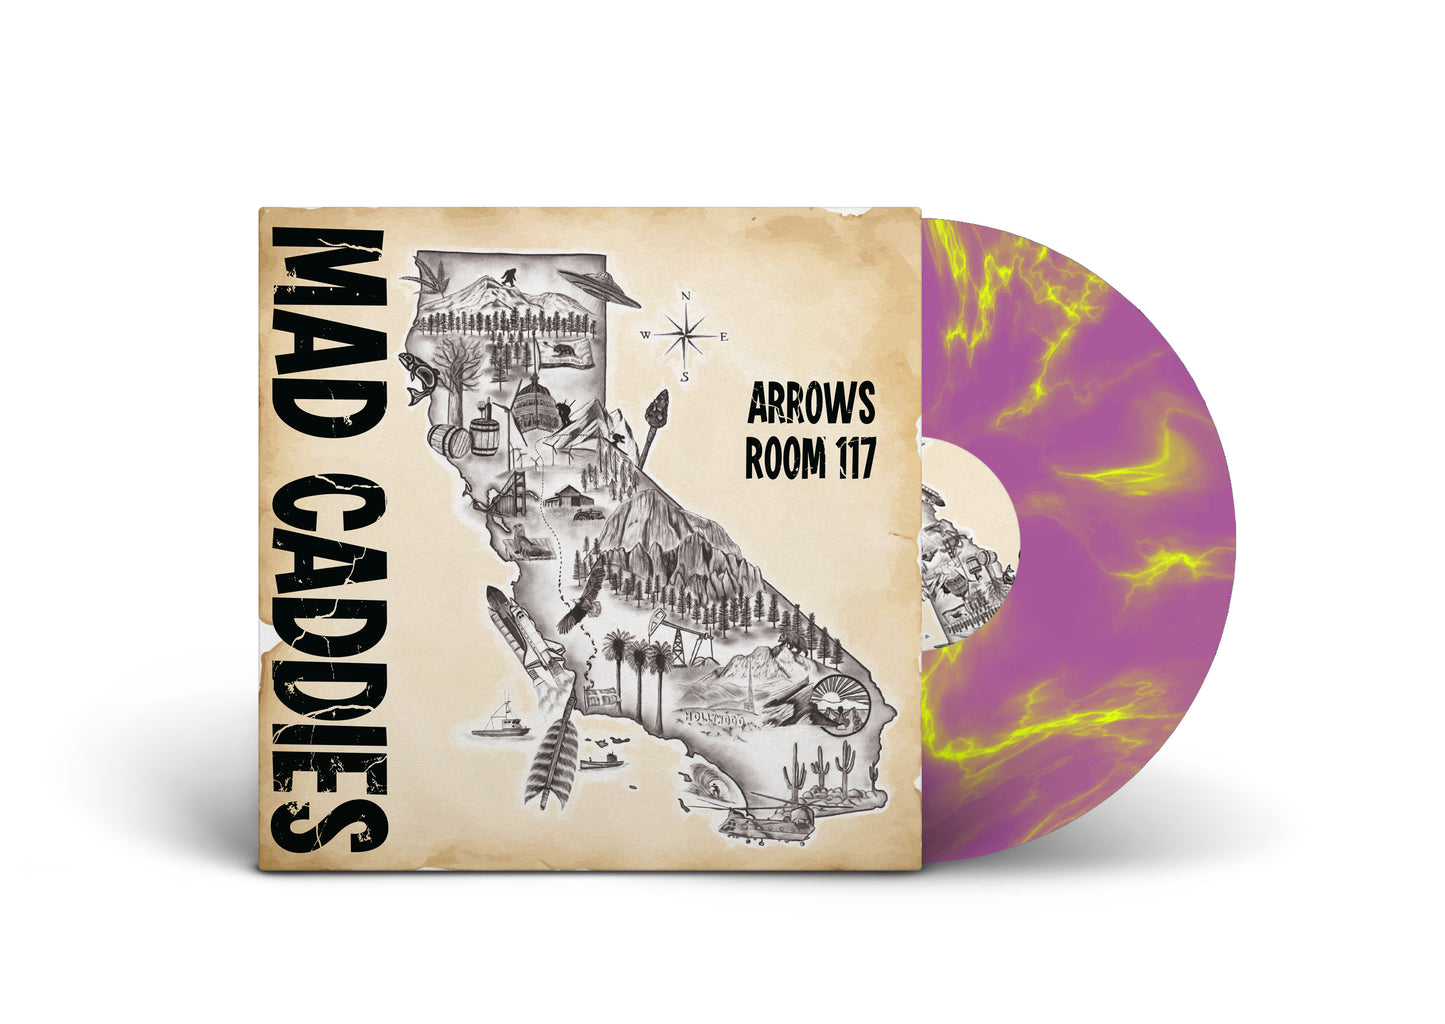 MAD CADDIES - "Arrows Room 117" (SBAM) (LP/CD)